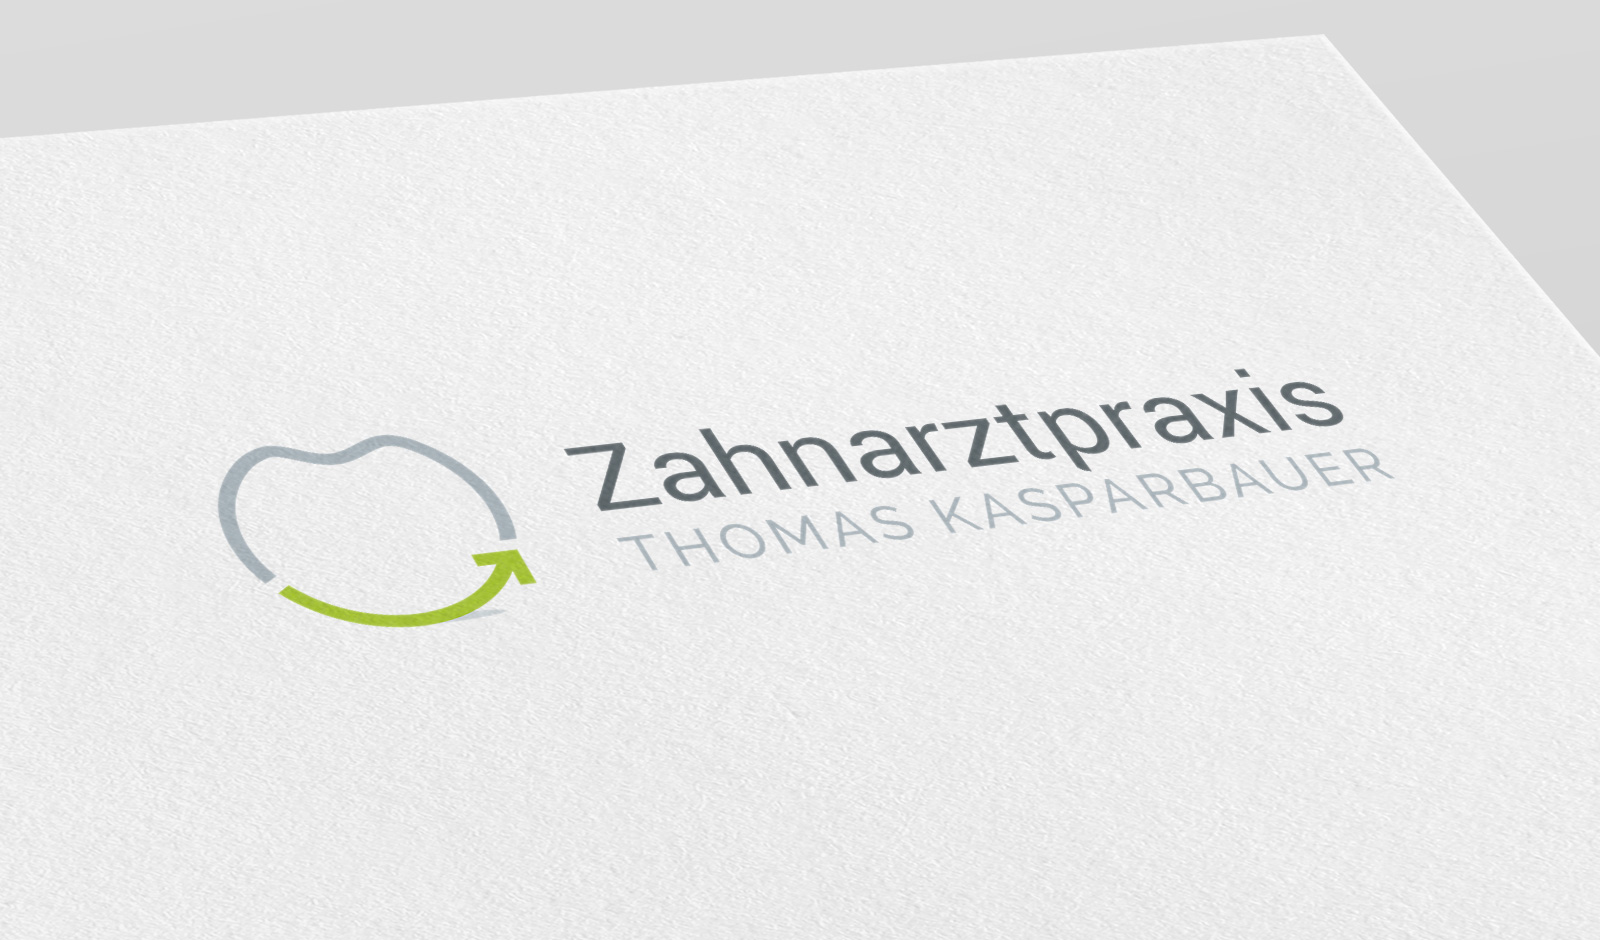 Zahnarztpraxis Pilsting Thomas Kasparbauer Logodesign